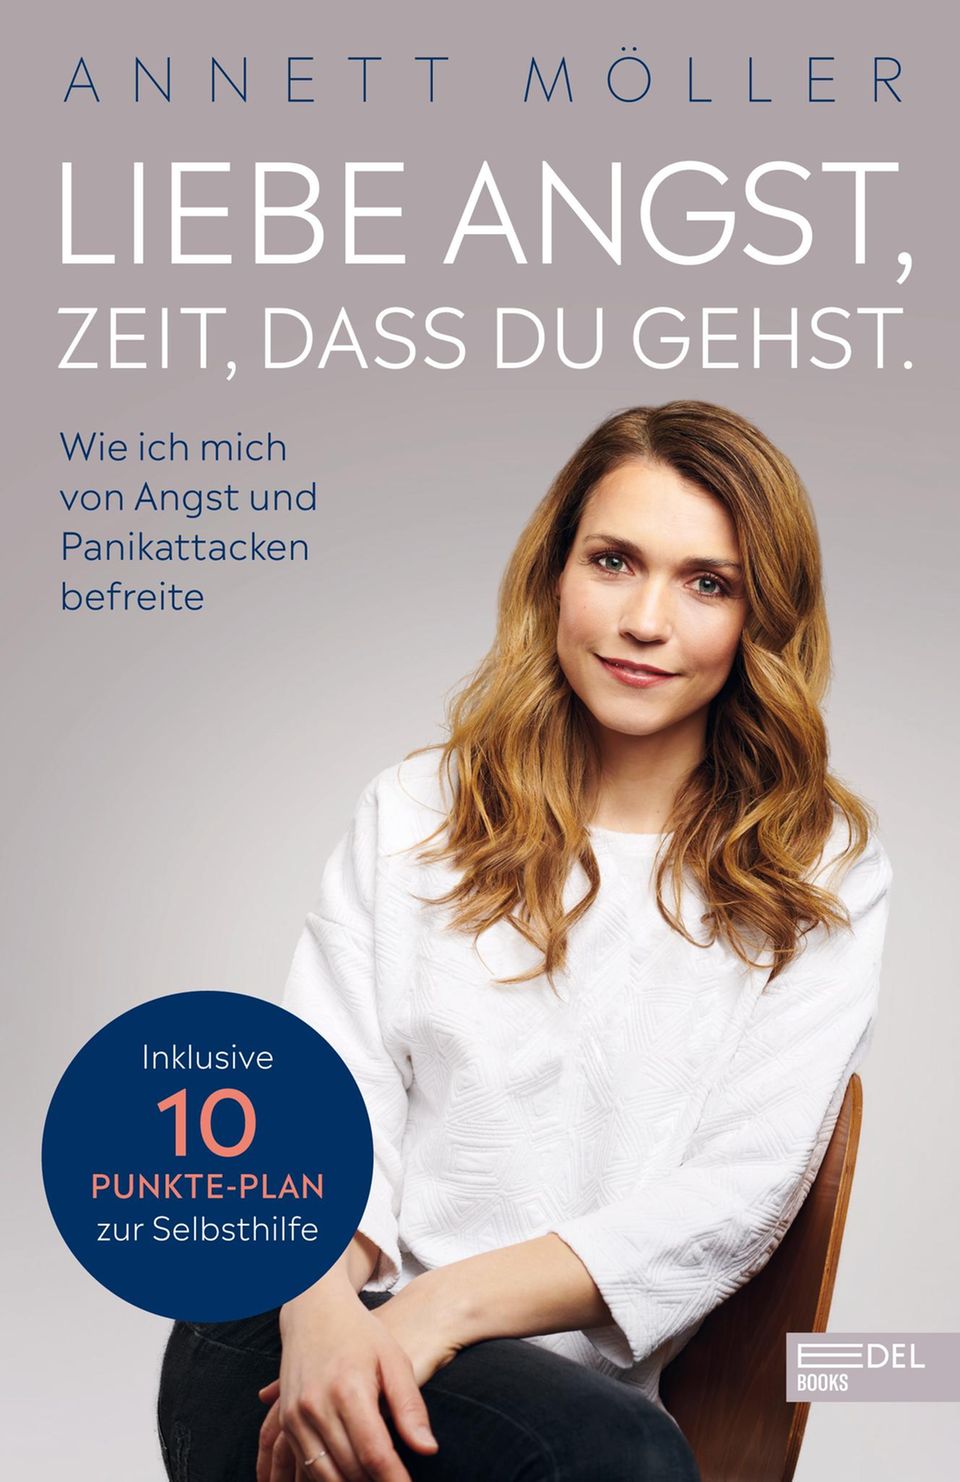 Annett Möllers Buch "Liebe Angst, Zeit, dass du gehst" ist am 1. Oktober 2021 bei Edel Books erschienen.